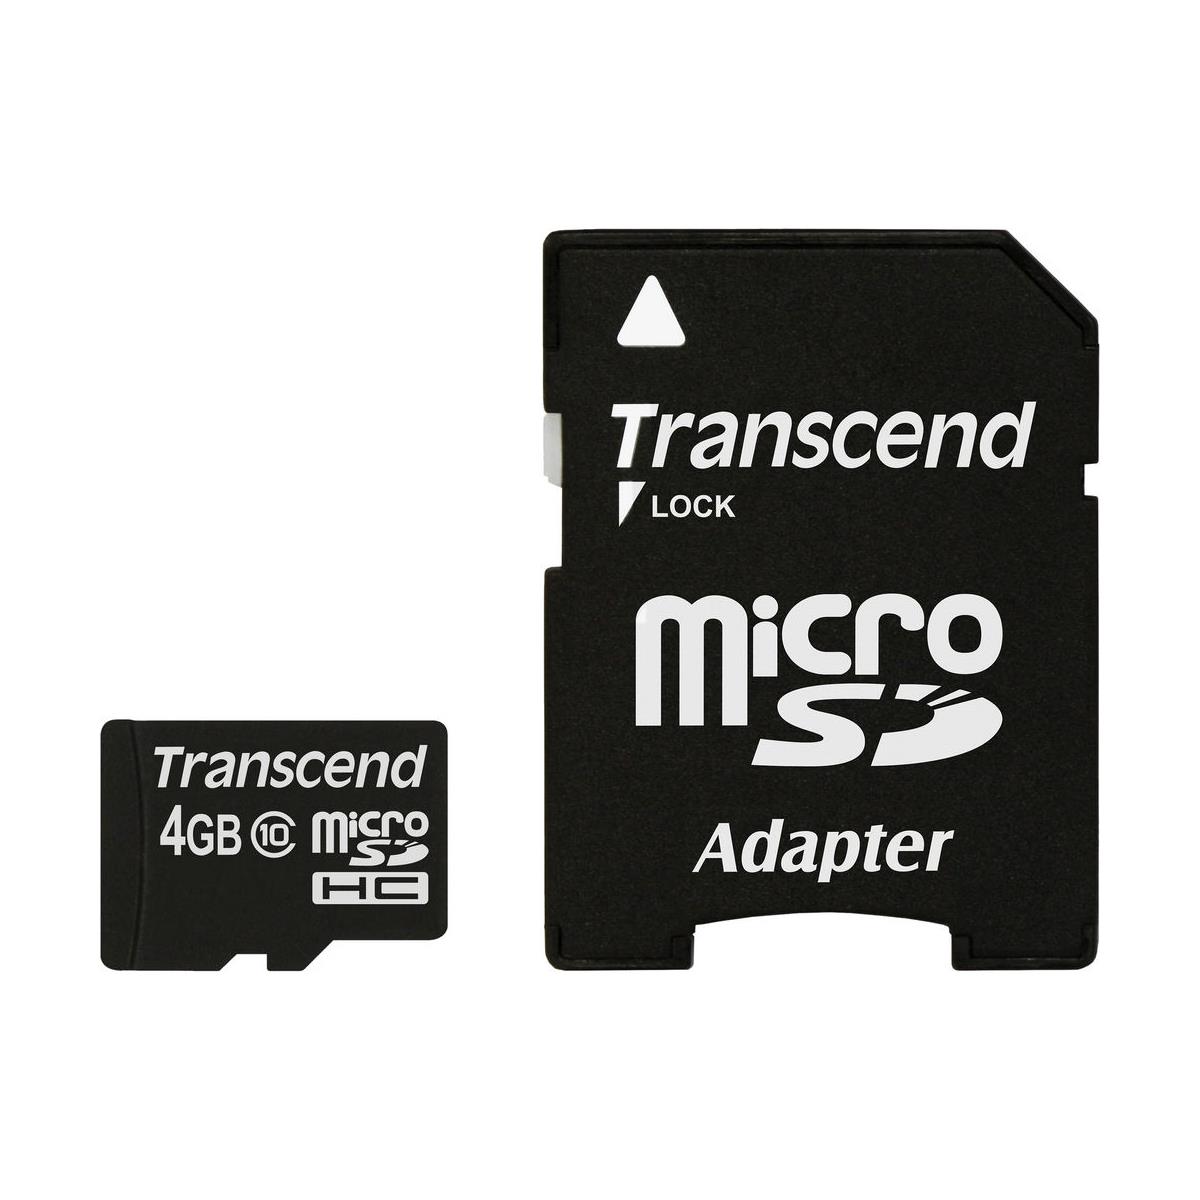 

Transcend 4GB Class 10 UHS-I U1 microSDHC Memory Card + SD Adapter